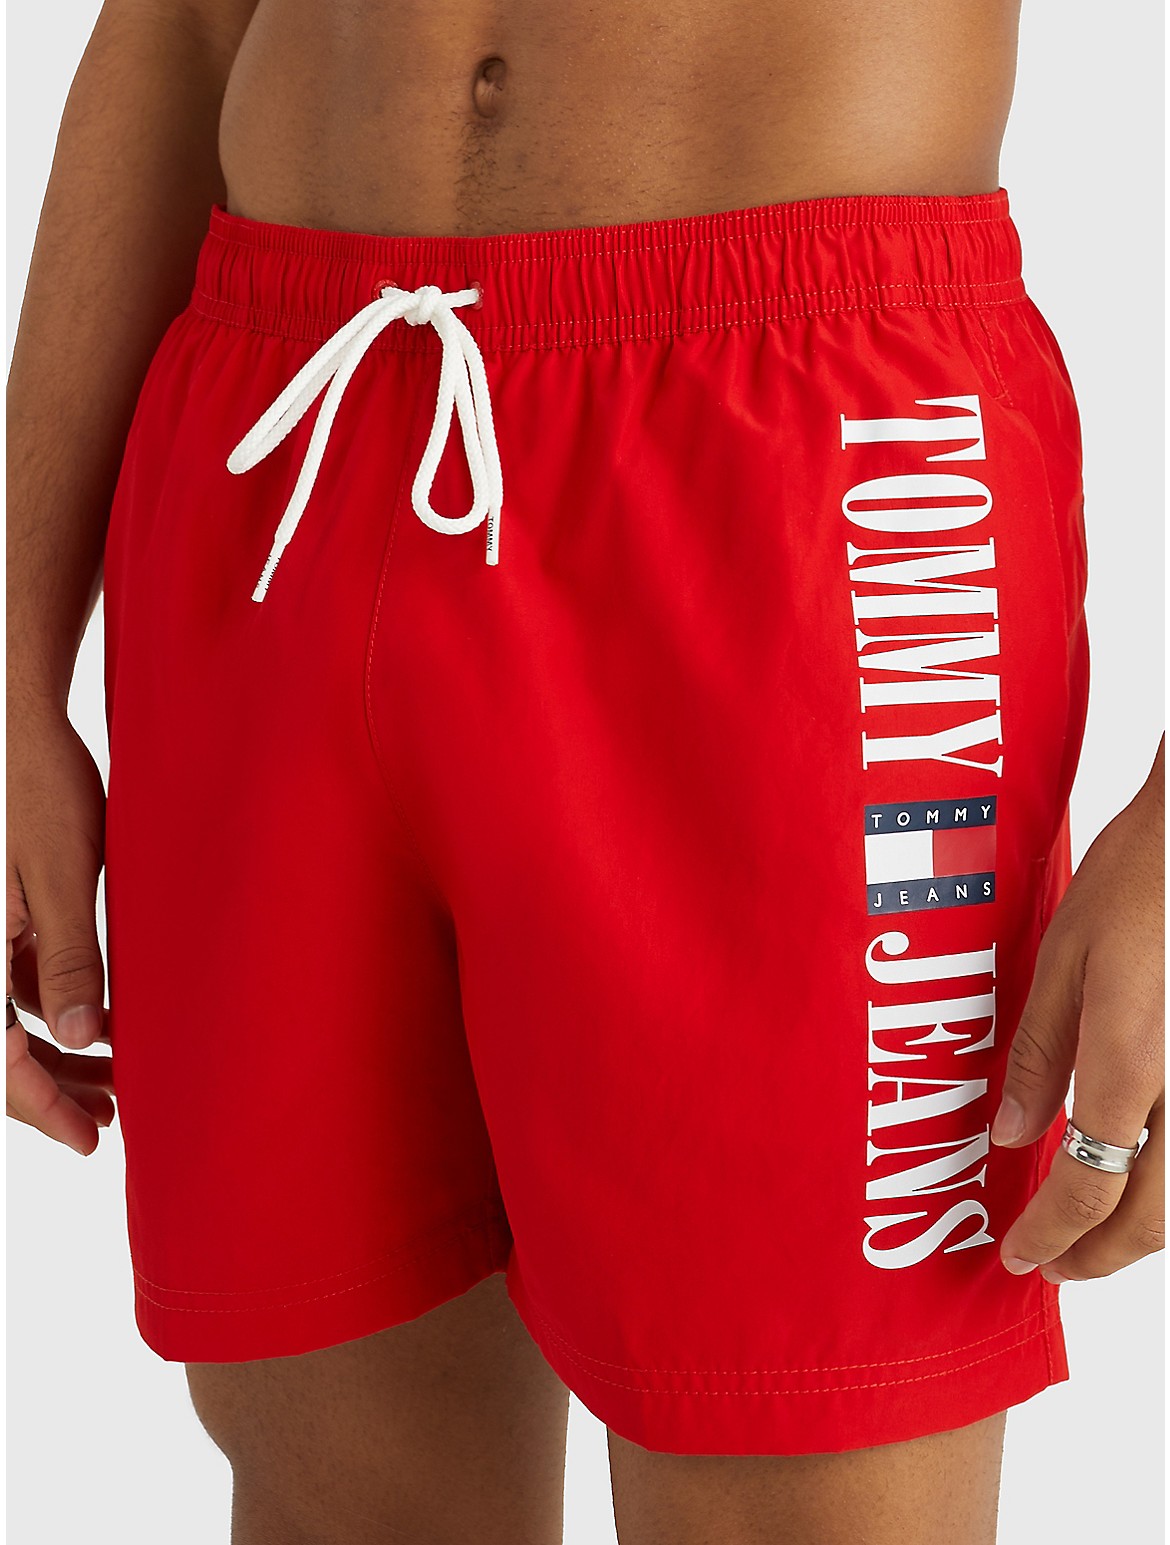 Tommy Hilfiger Men's Logo Print 7" Swim Trunk - Red - L